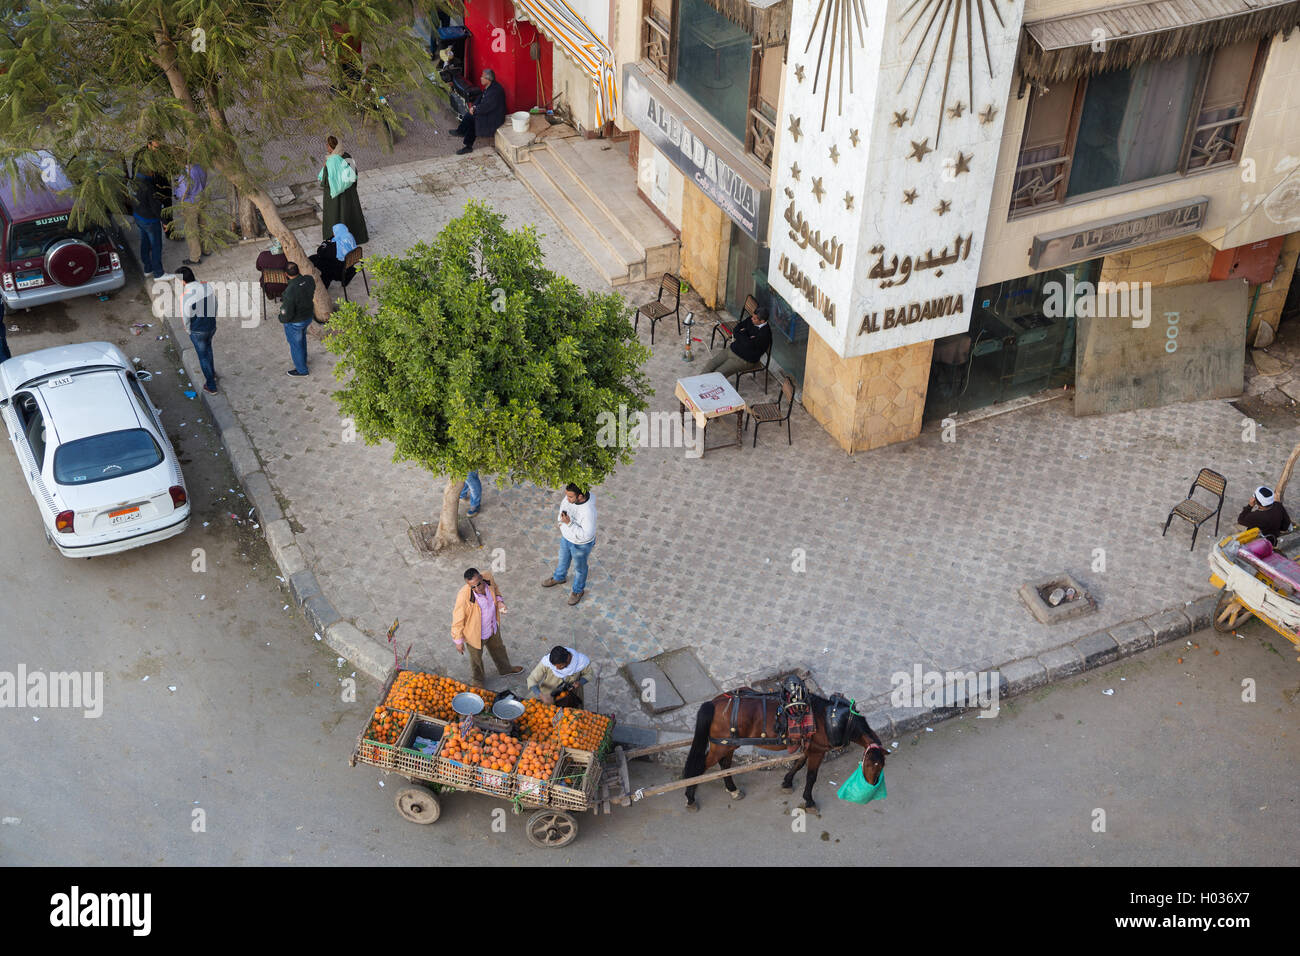 CAIRO, EGYPT - FEBRUARY 2, 2016: Aerial view of street corner with horse cart oranges vendor. Stock Photo